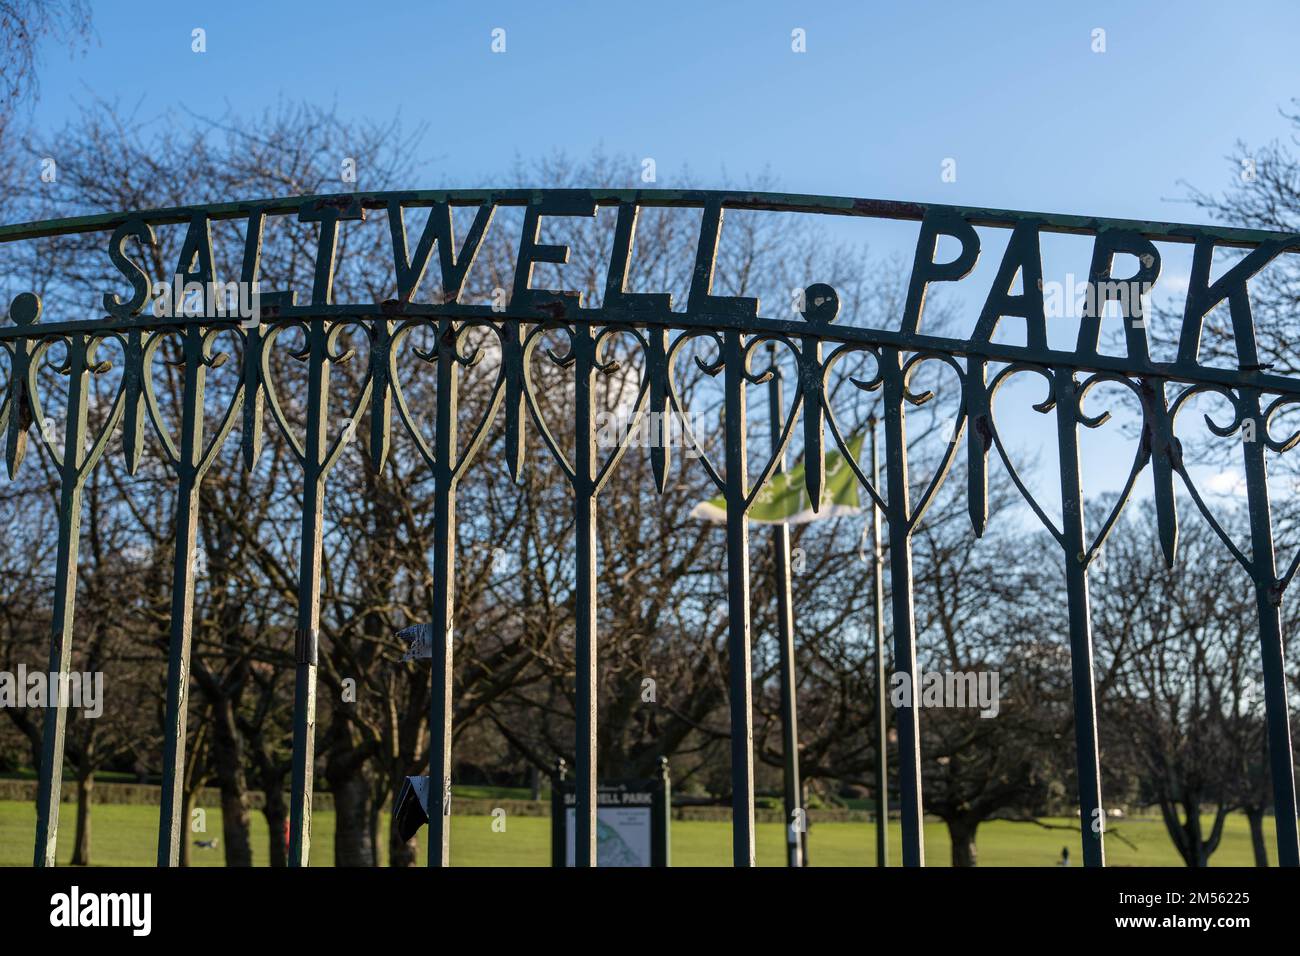 The entrance gates to Saltwell Park - a public park in Gateshead, UK Stock Photo